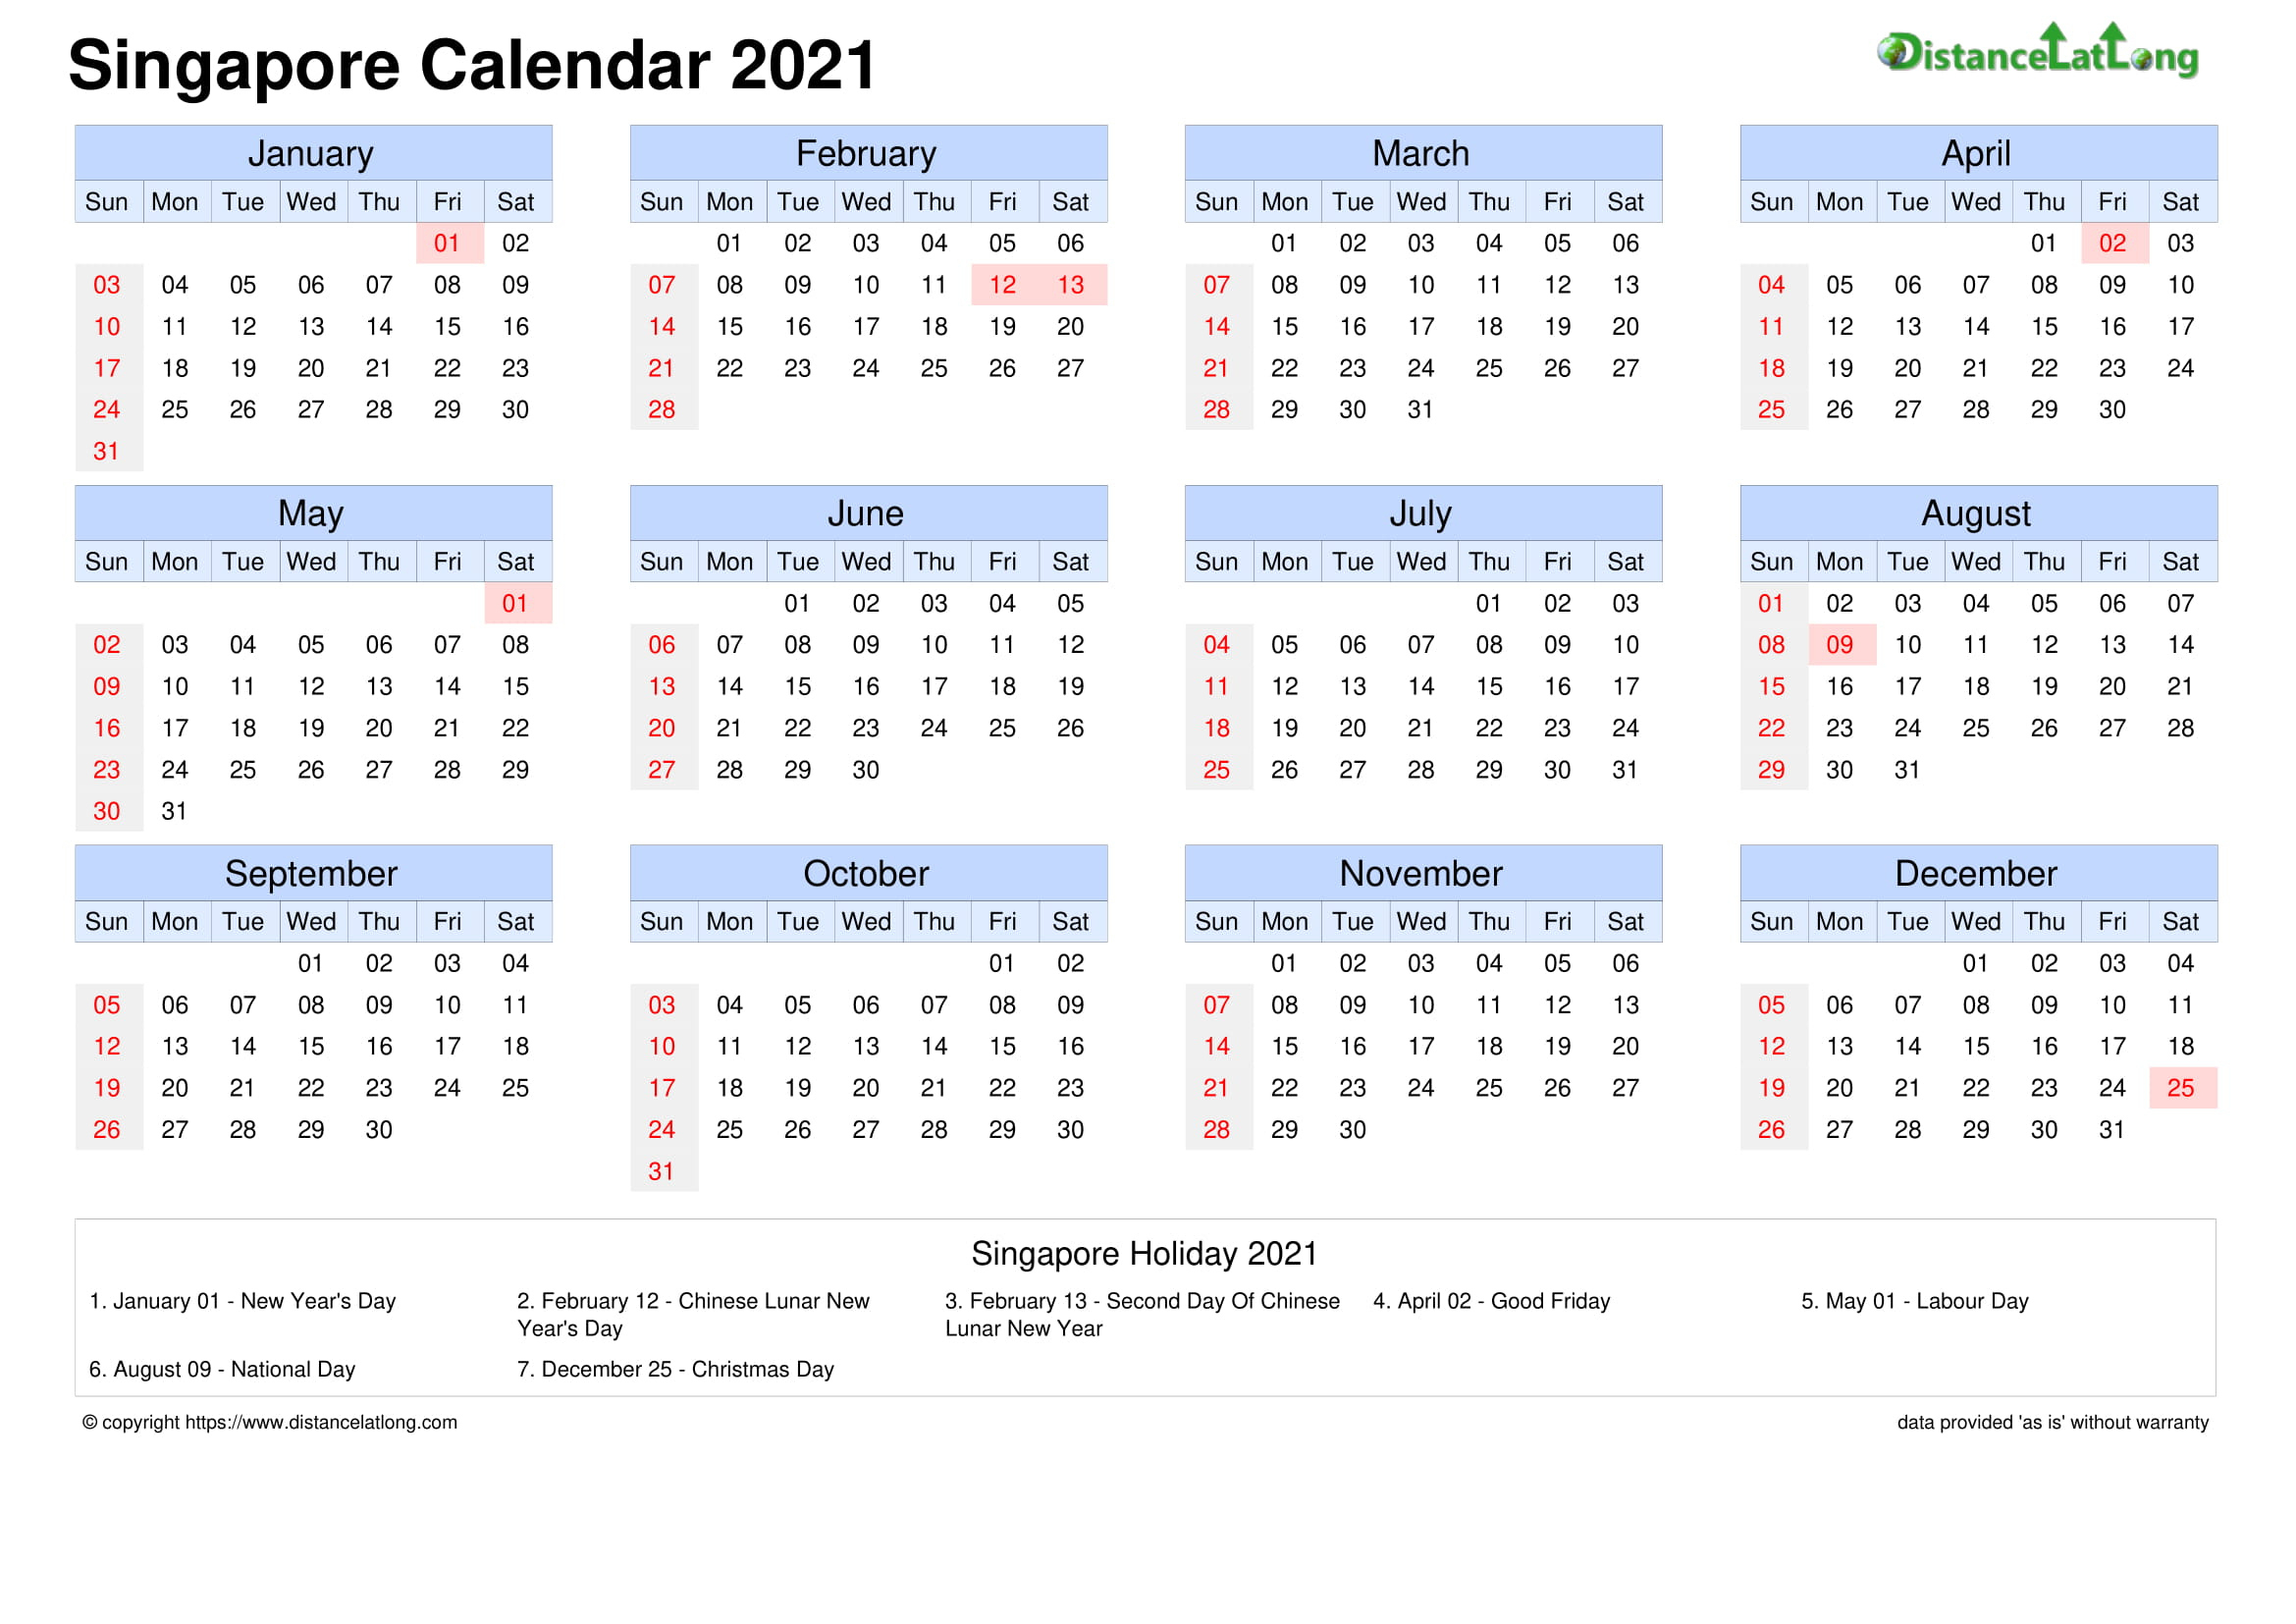 See Also: November 2021 Calendar Singapore